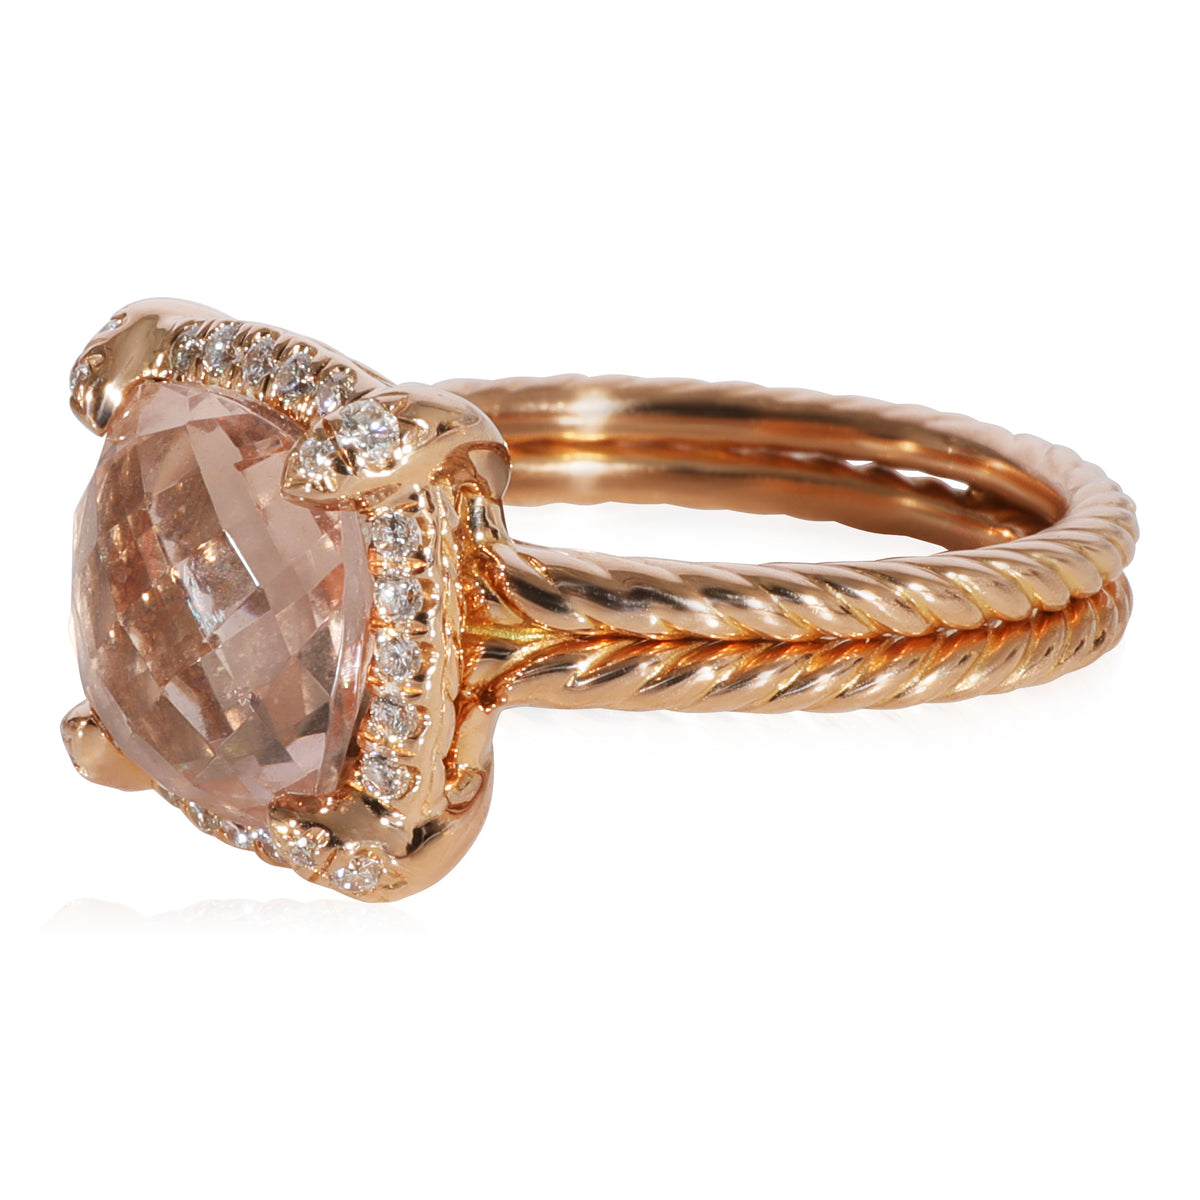 David Yurman Chatelaine Morganite Diamond Ring in 18k Rose Gold 0.15 CTW